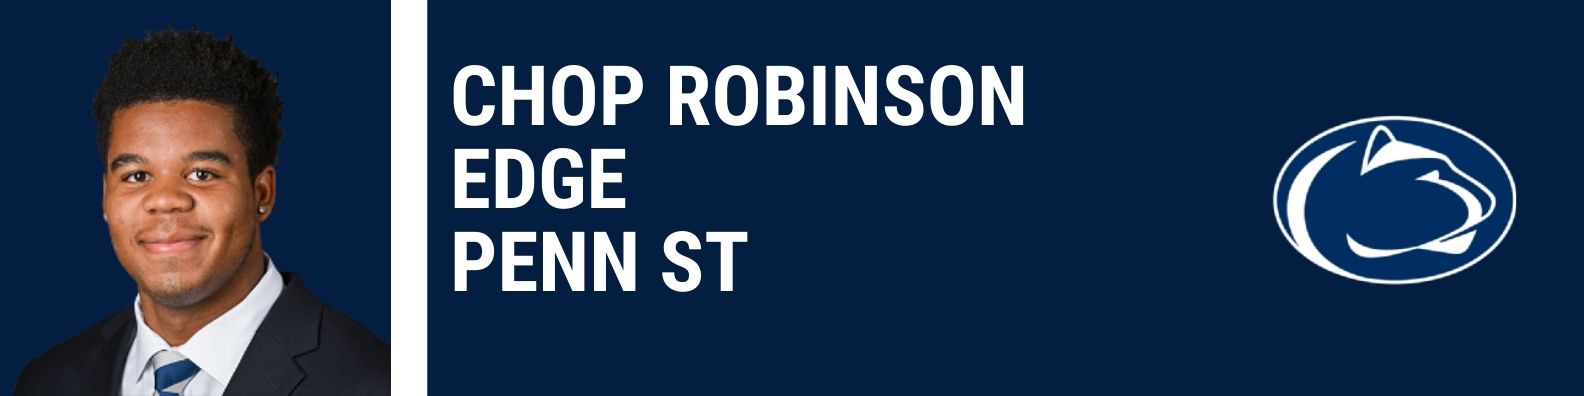 Chop Robinson, Penn St